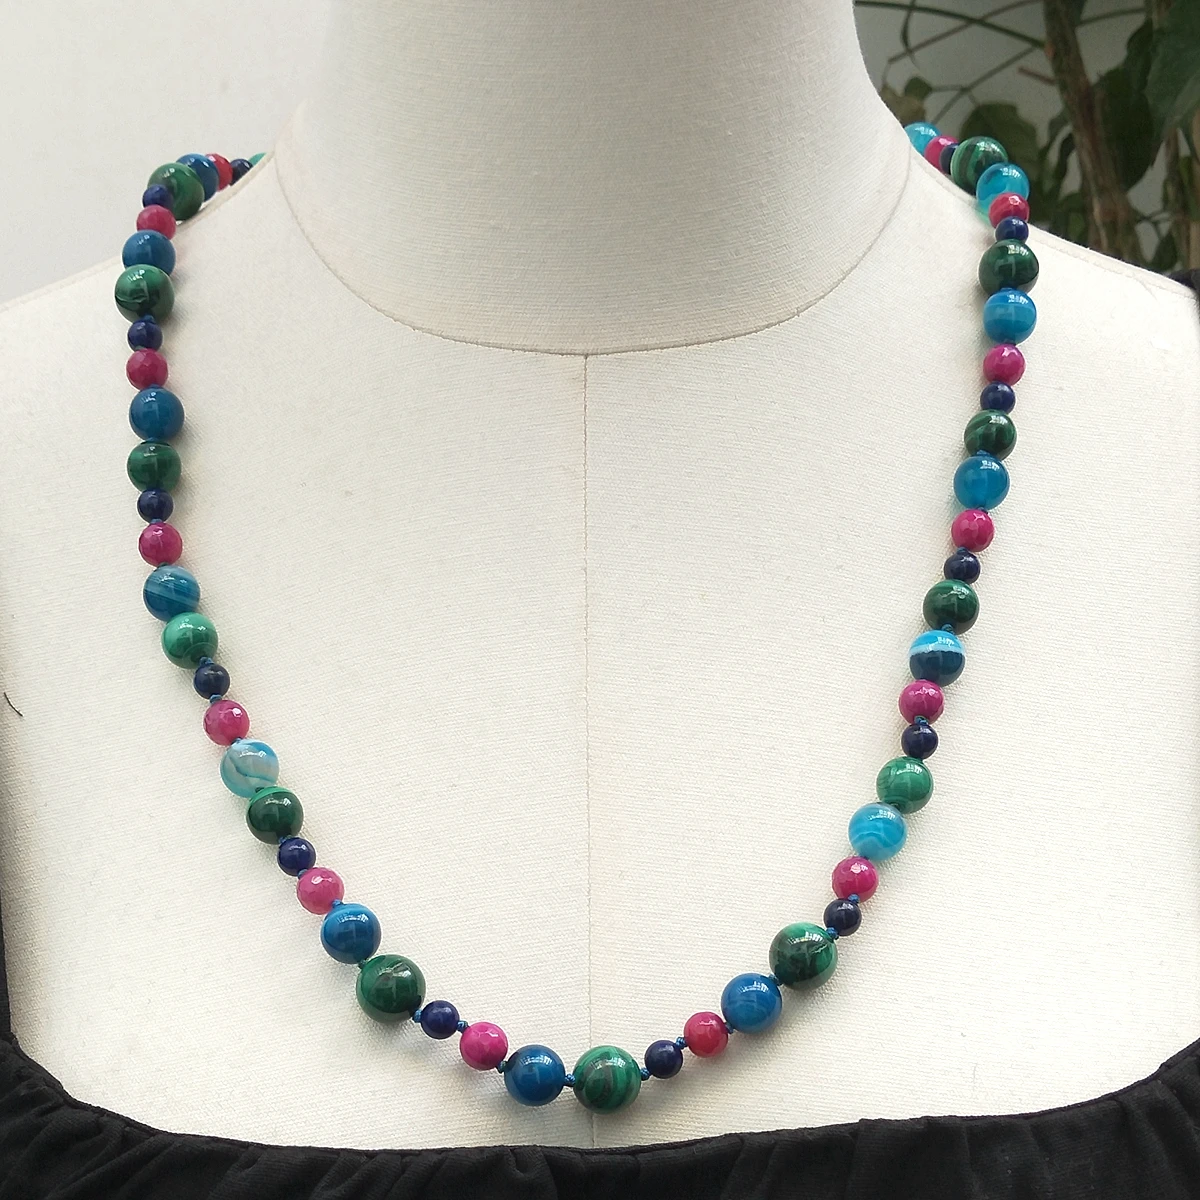 

Lii Ji Real Stone Mutil Color Simple necklace 72cm Lapis lazuli Malachite Agate Necklace Women Jewelry Stock Sale